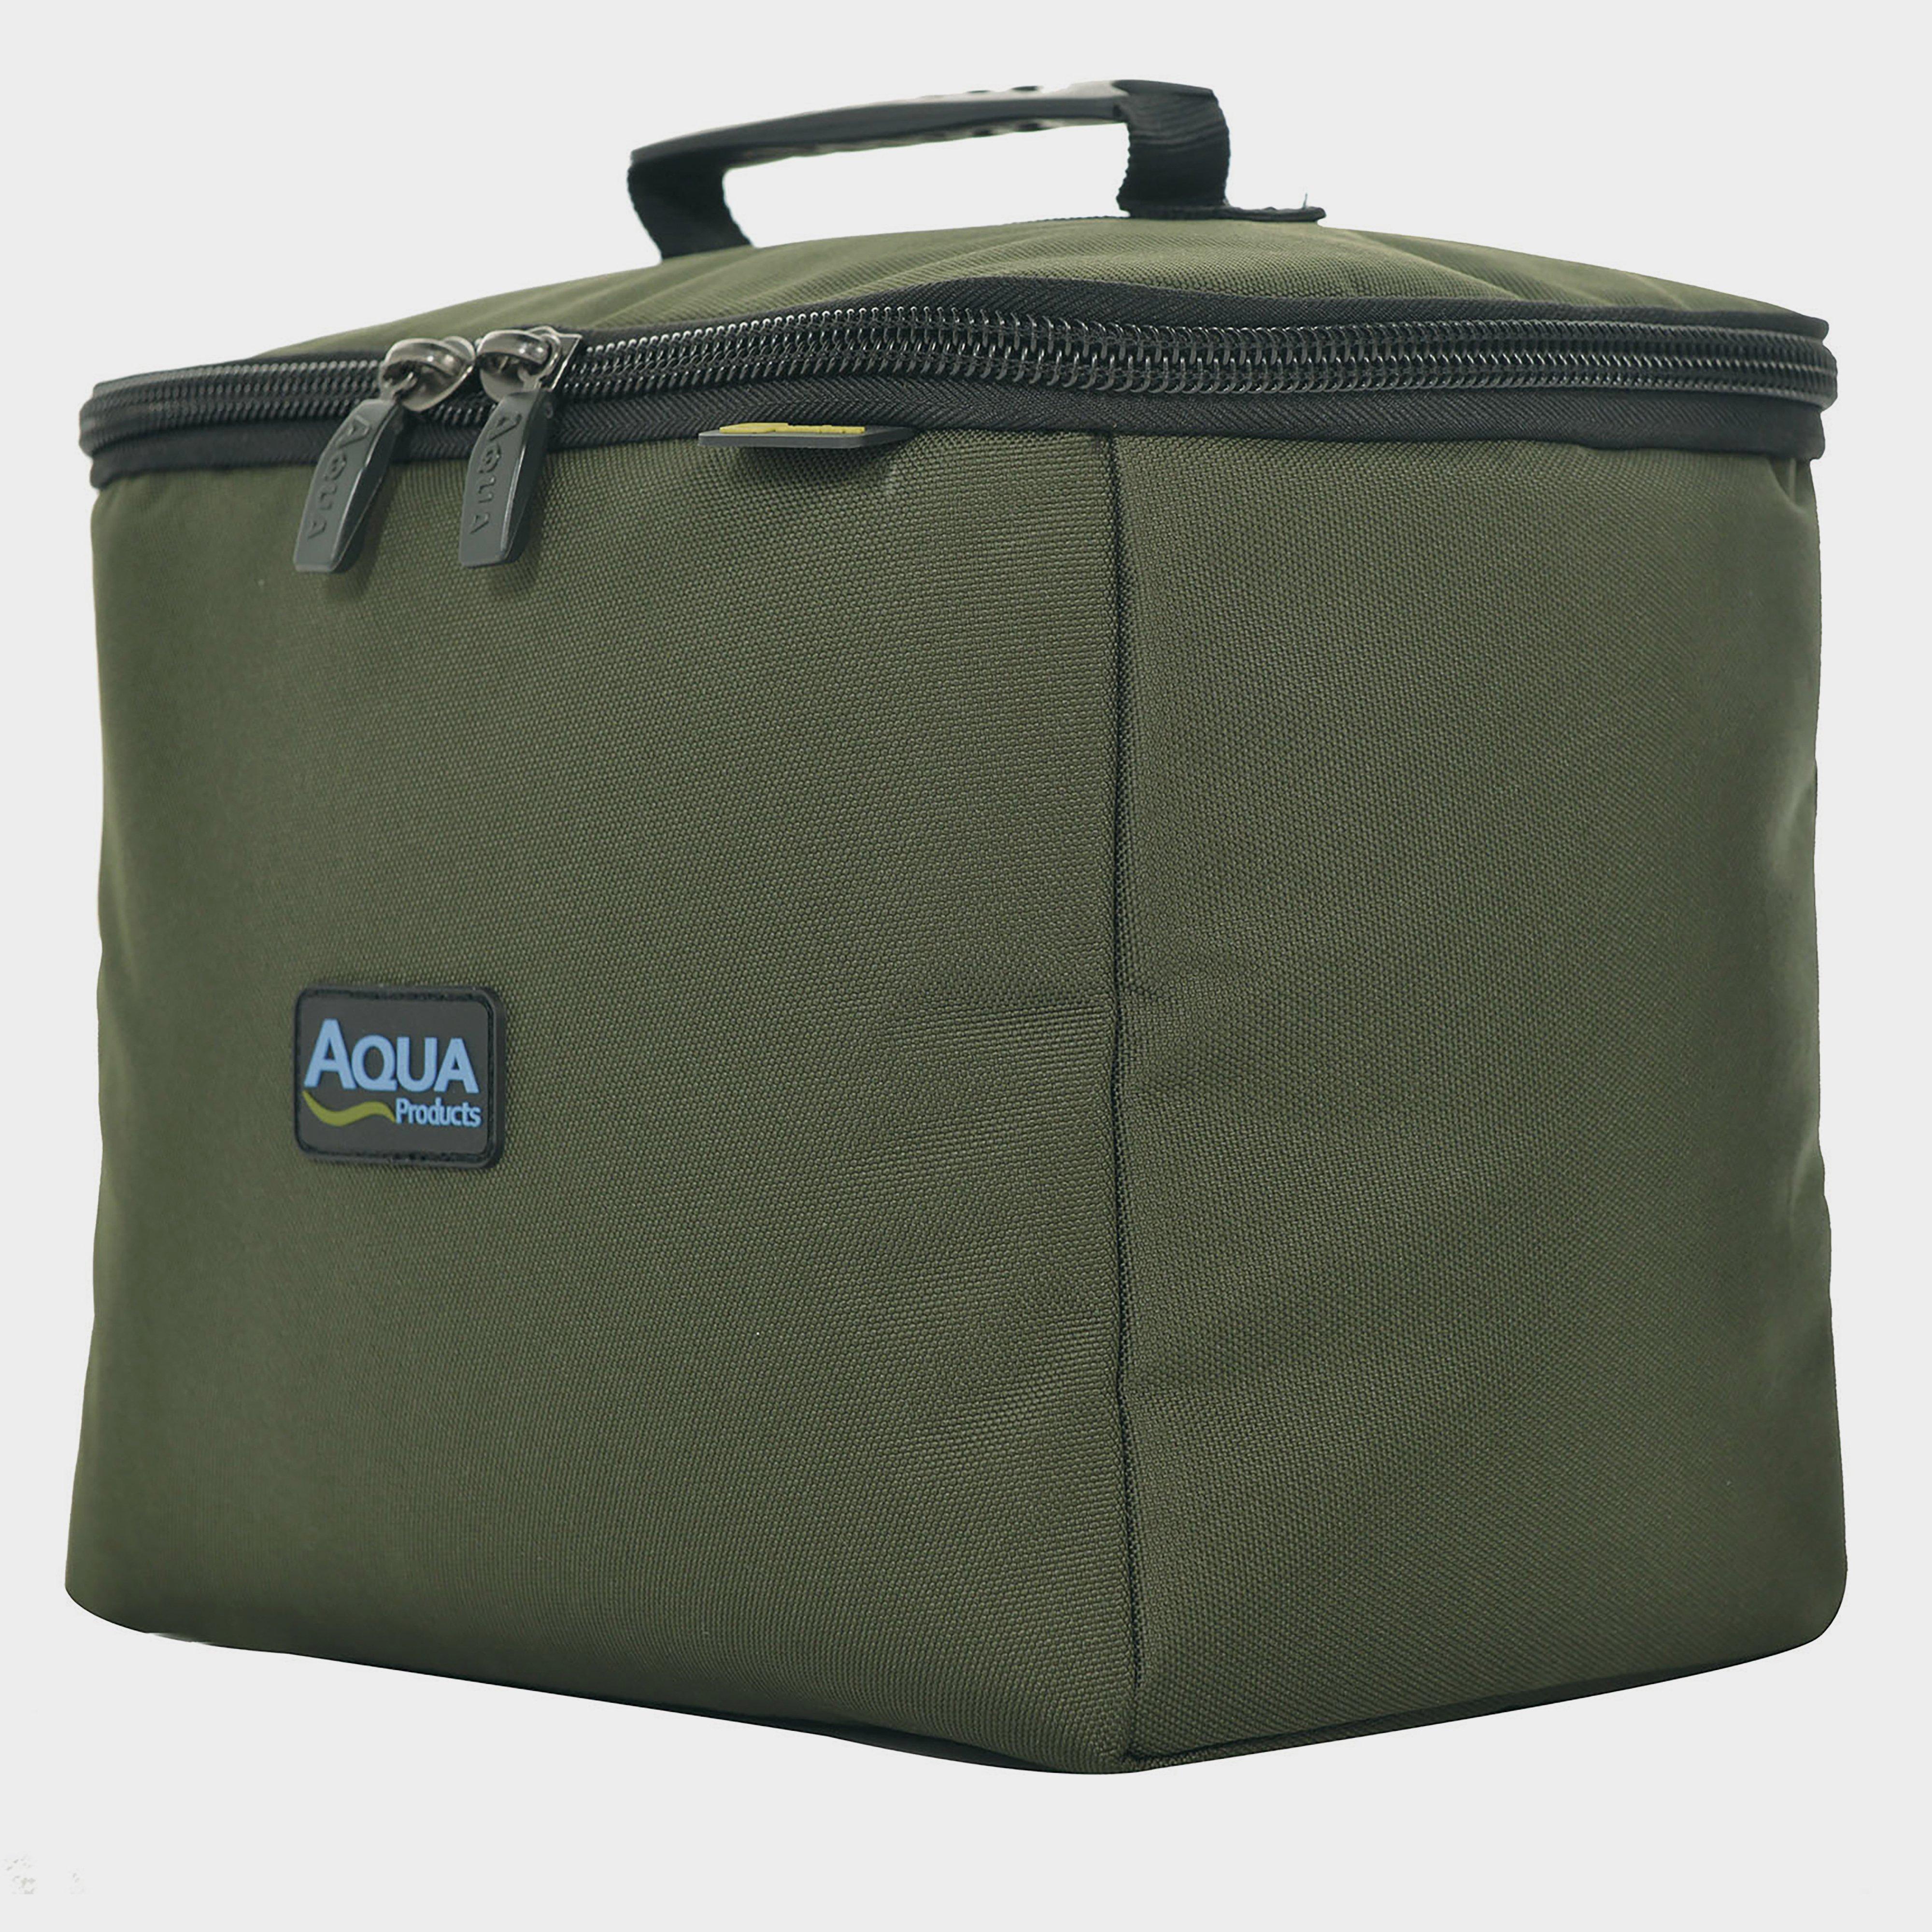  AQUA Roving Cool Bag Black Series, Green